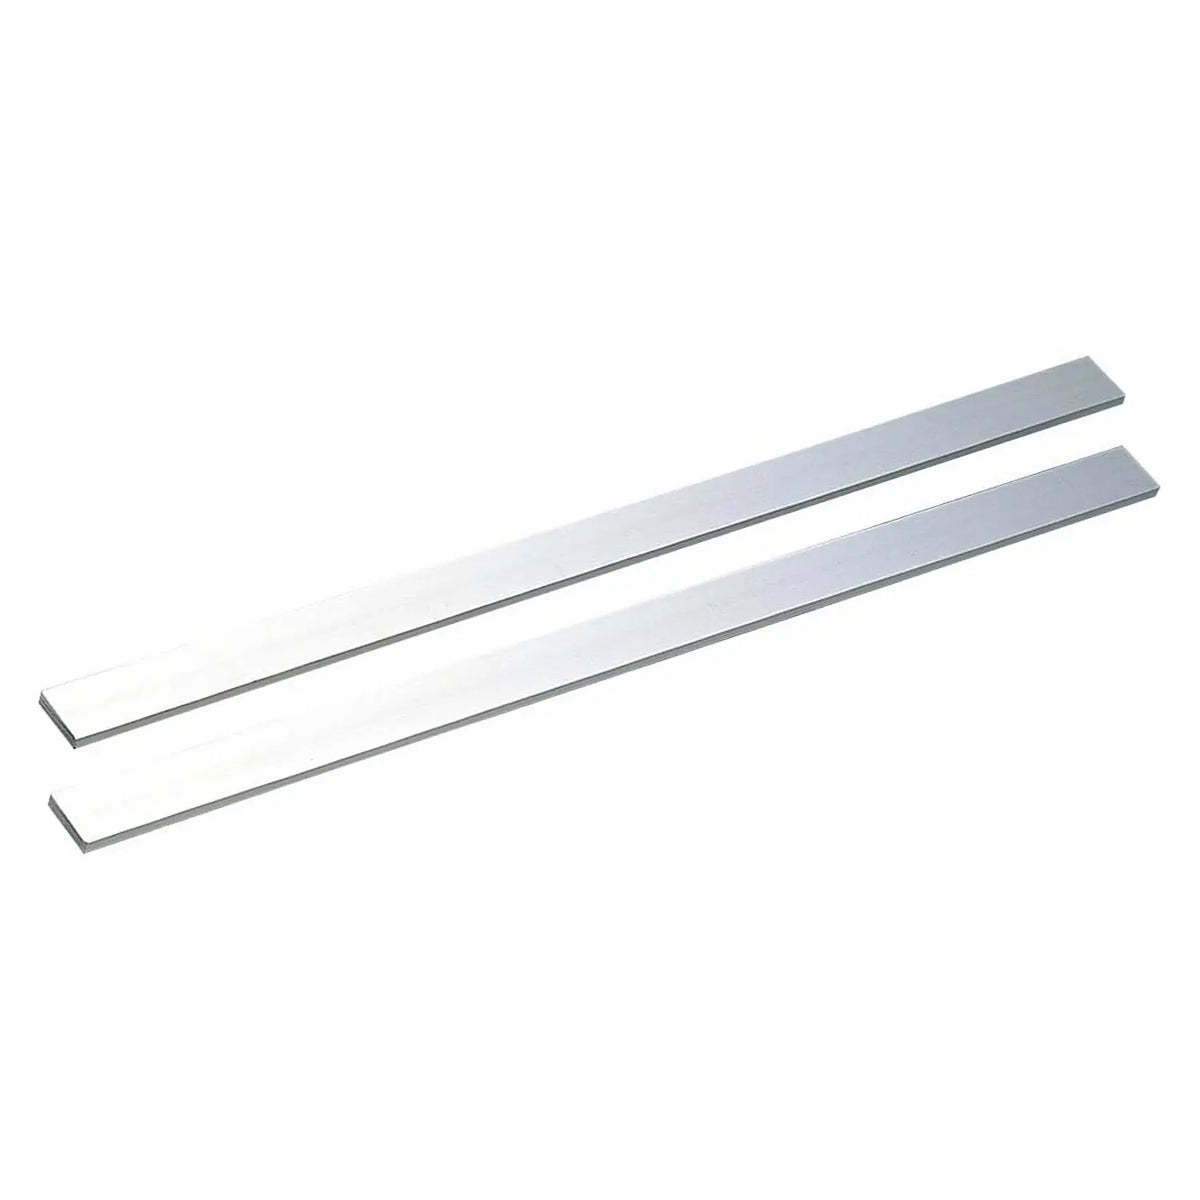 EBM Aluminum Rolling Pin Guide Sticks 2pcs